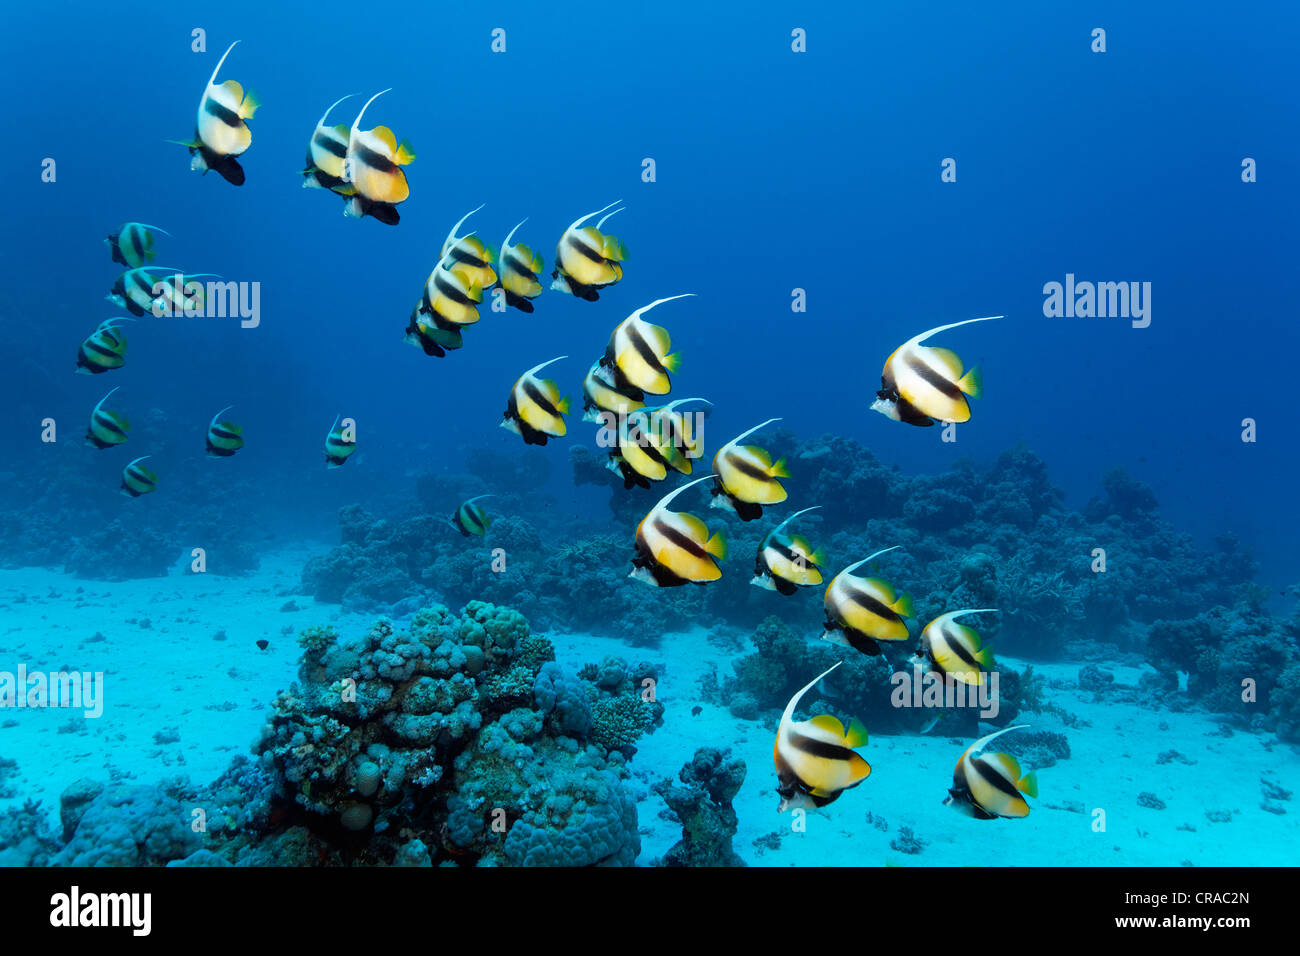 School of Red Sea bannerfish (Heniochus intermedius) swimming in blue water and a coral reef, Sharp Malahi, Egypt, Red Sea Stock Photo